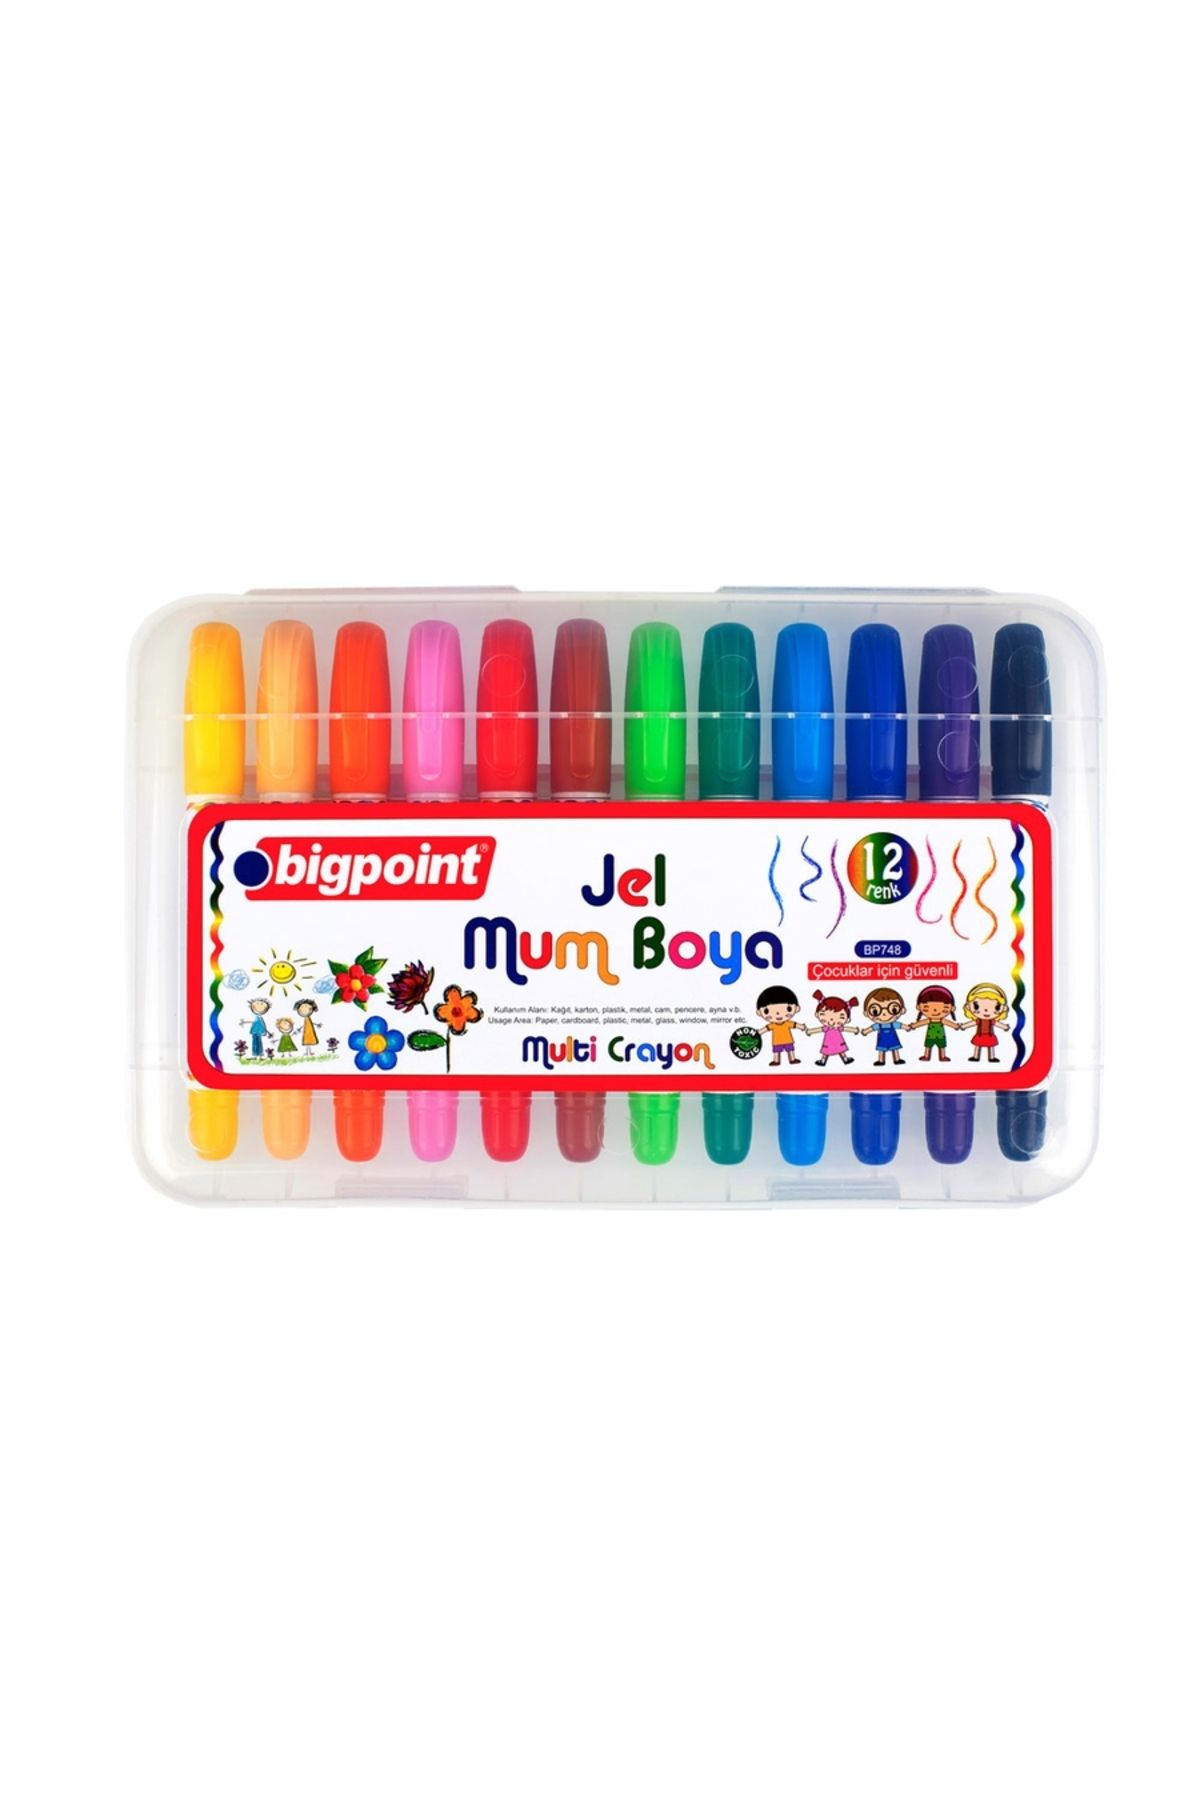 Bigpoint Multi Crayon Jel Mum Boya 12 Renk